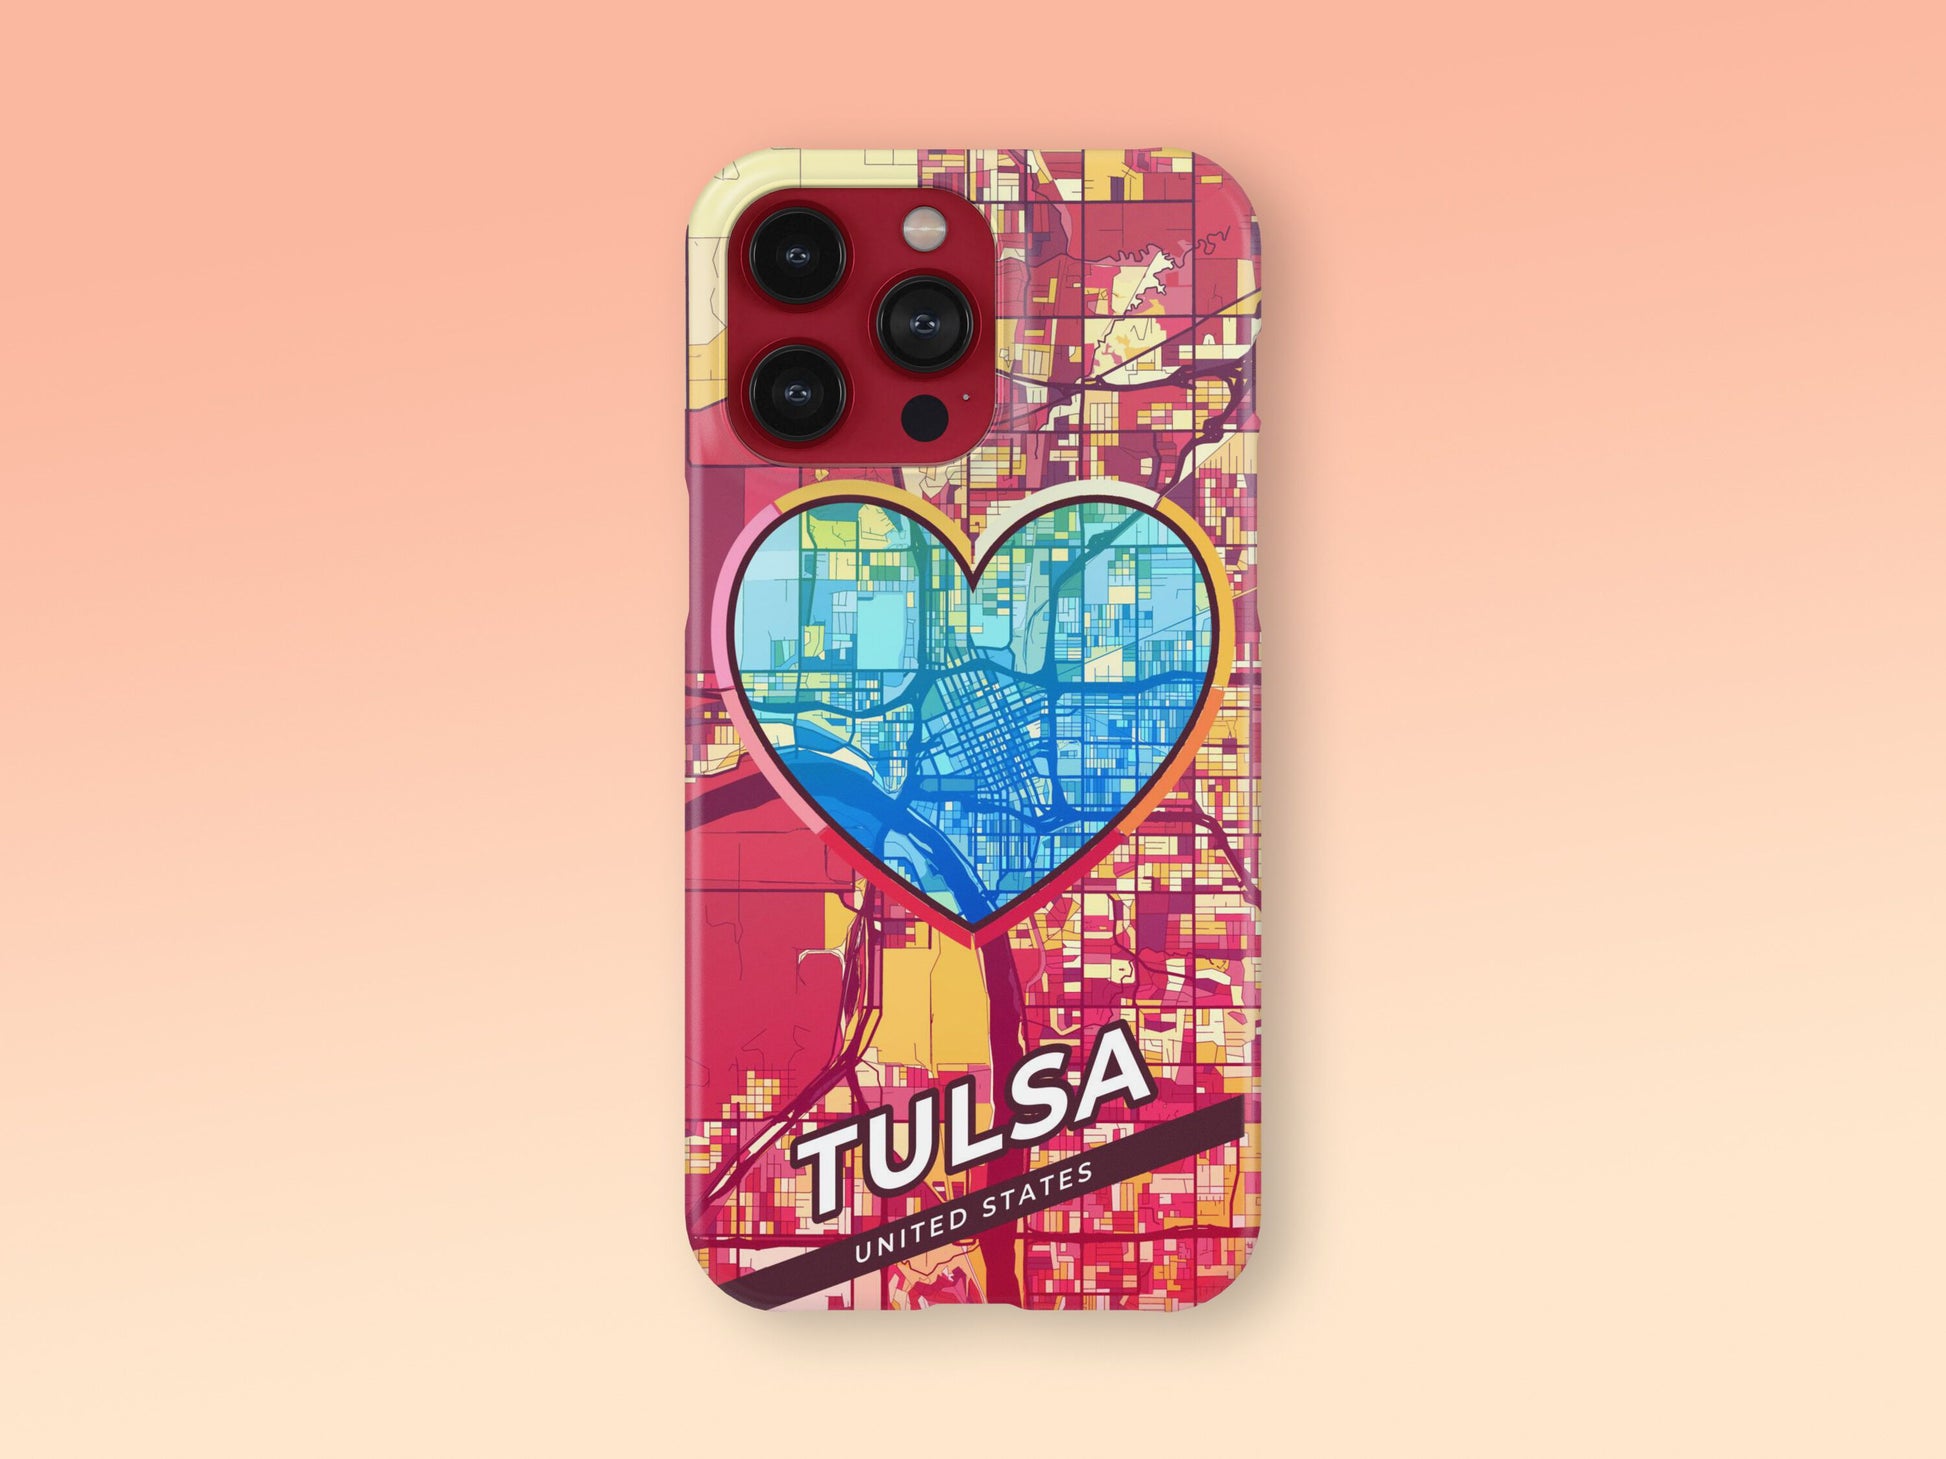 Tulsa Oklahoma slim phone case with colorful icon 2